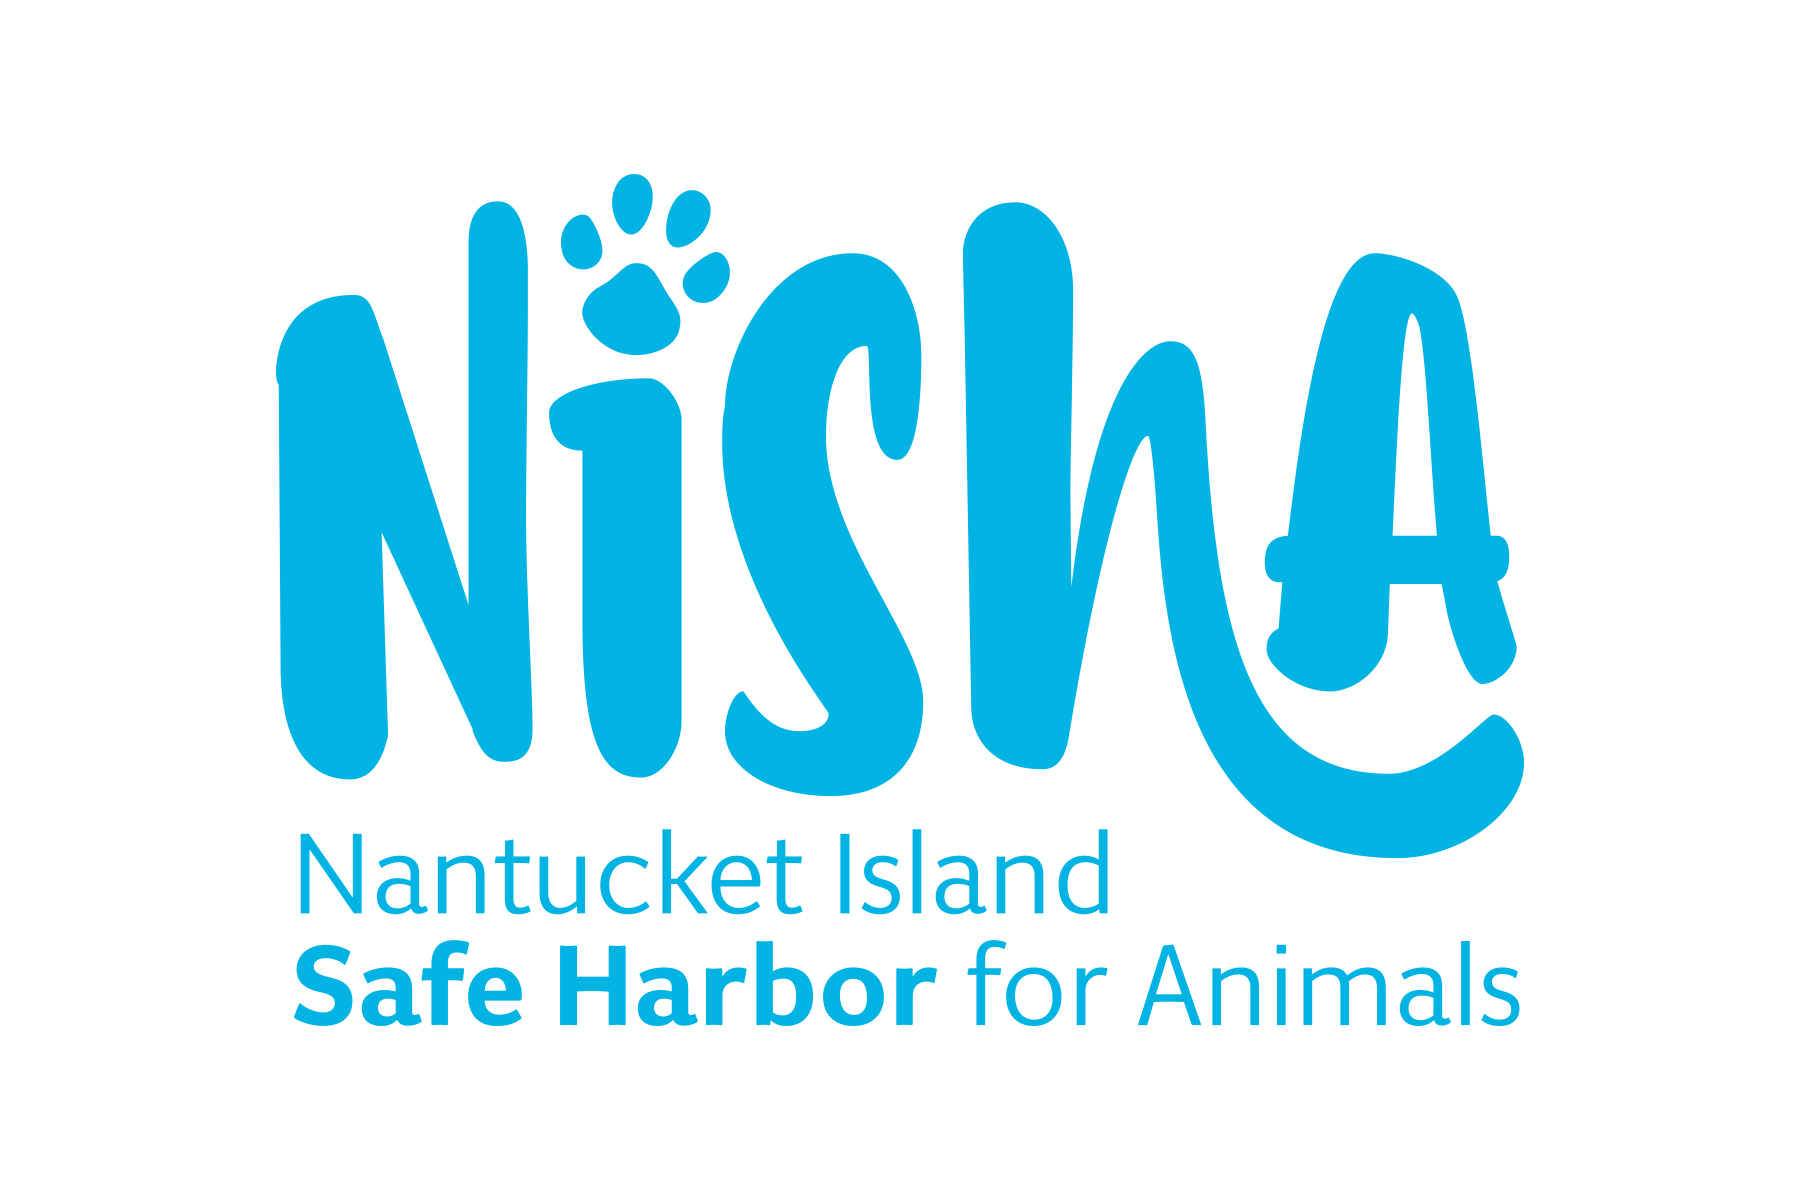 Nantucket, MA - Nantucket Island Safe Harbor for Animals